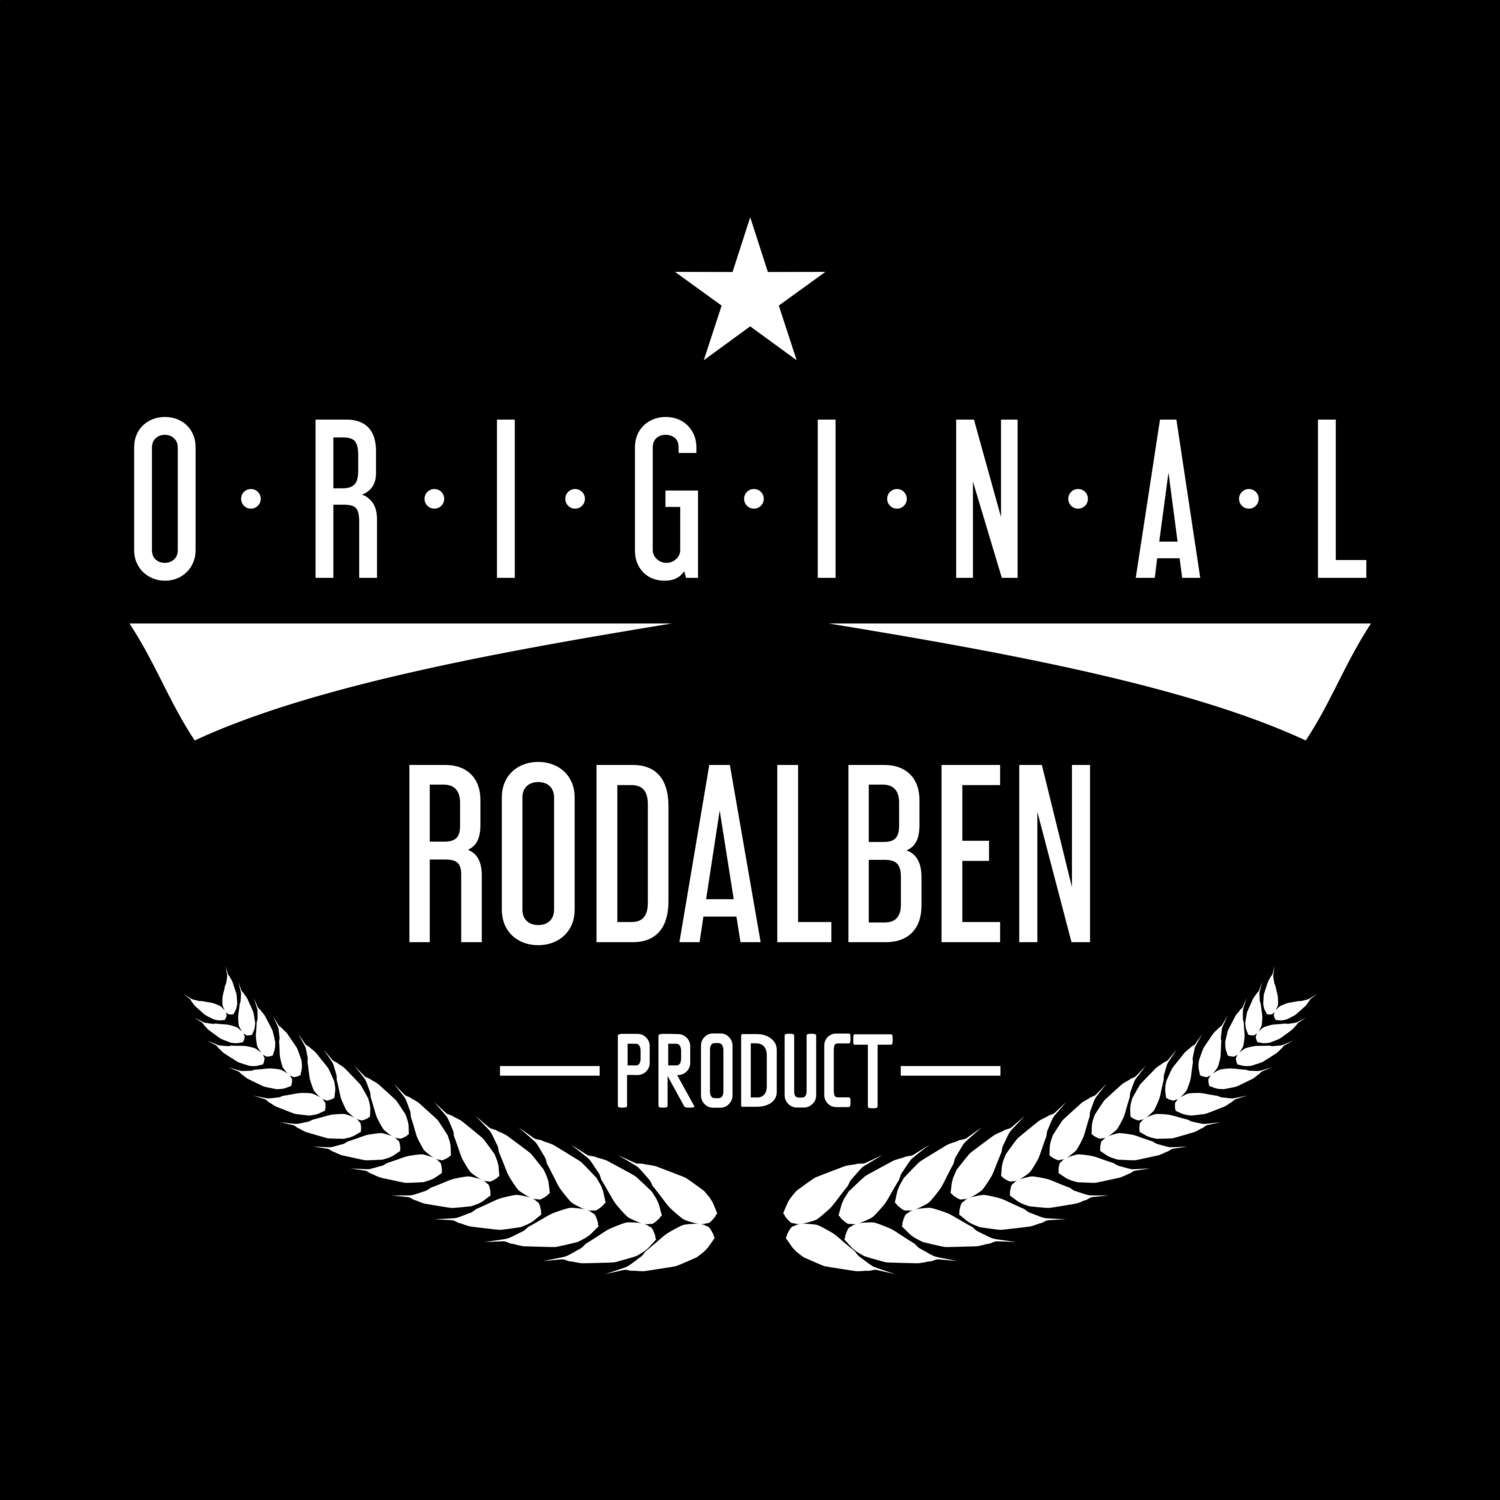 Rodalben T-Shirt »Original Product«